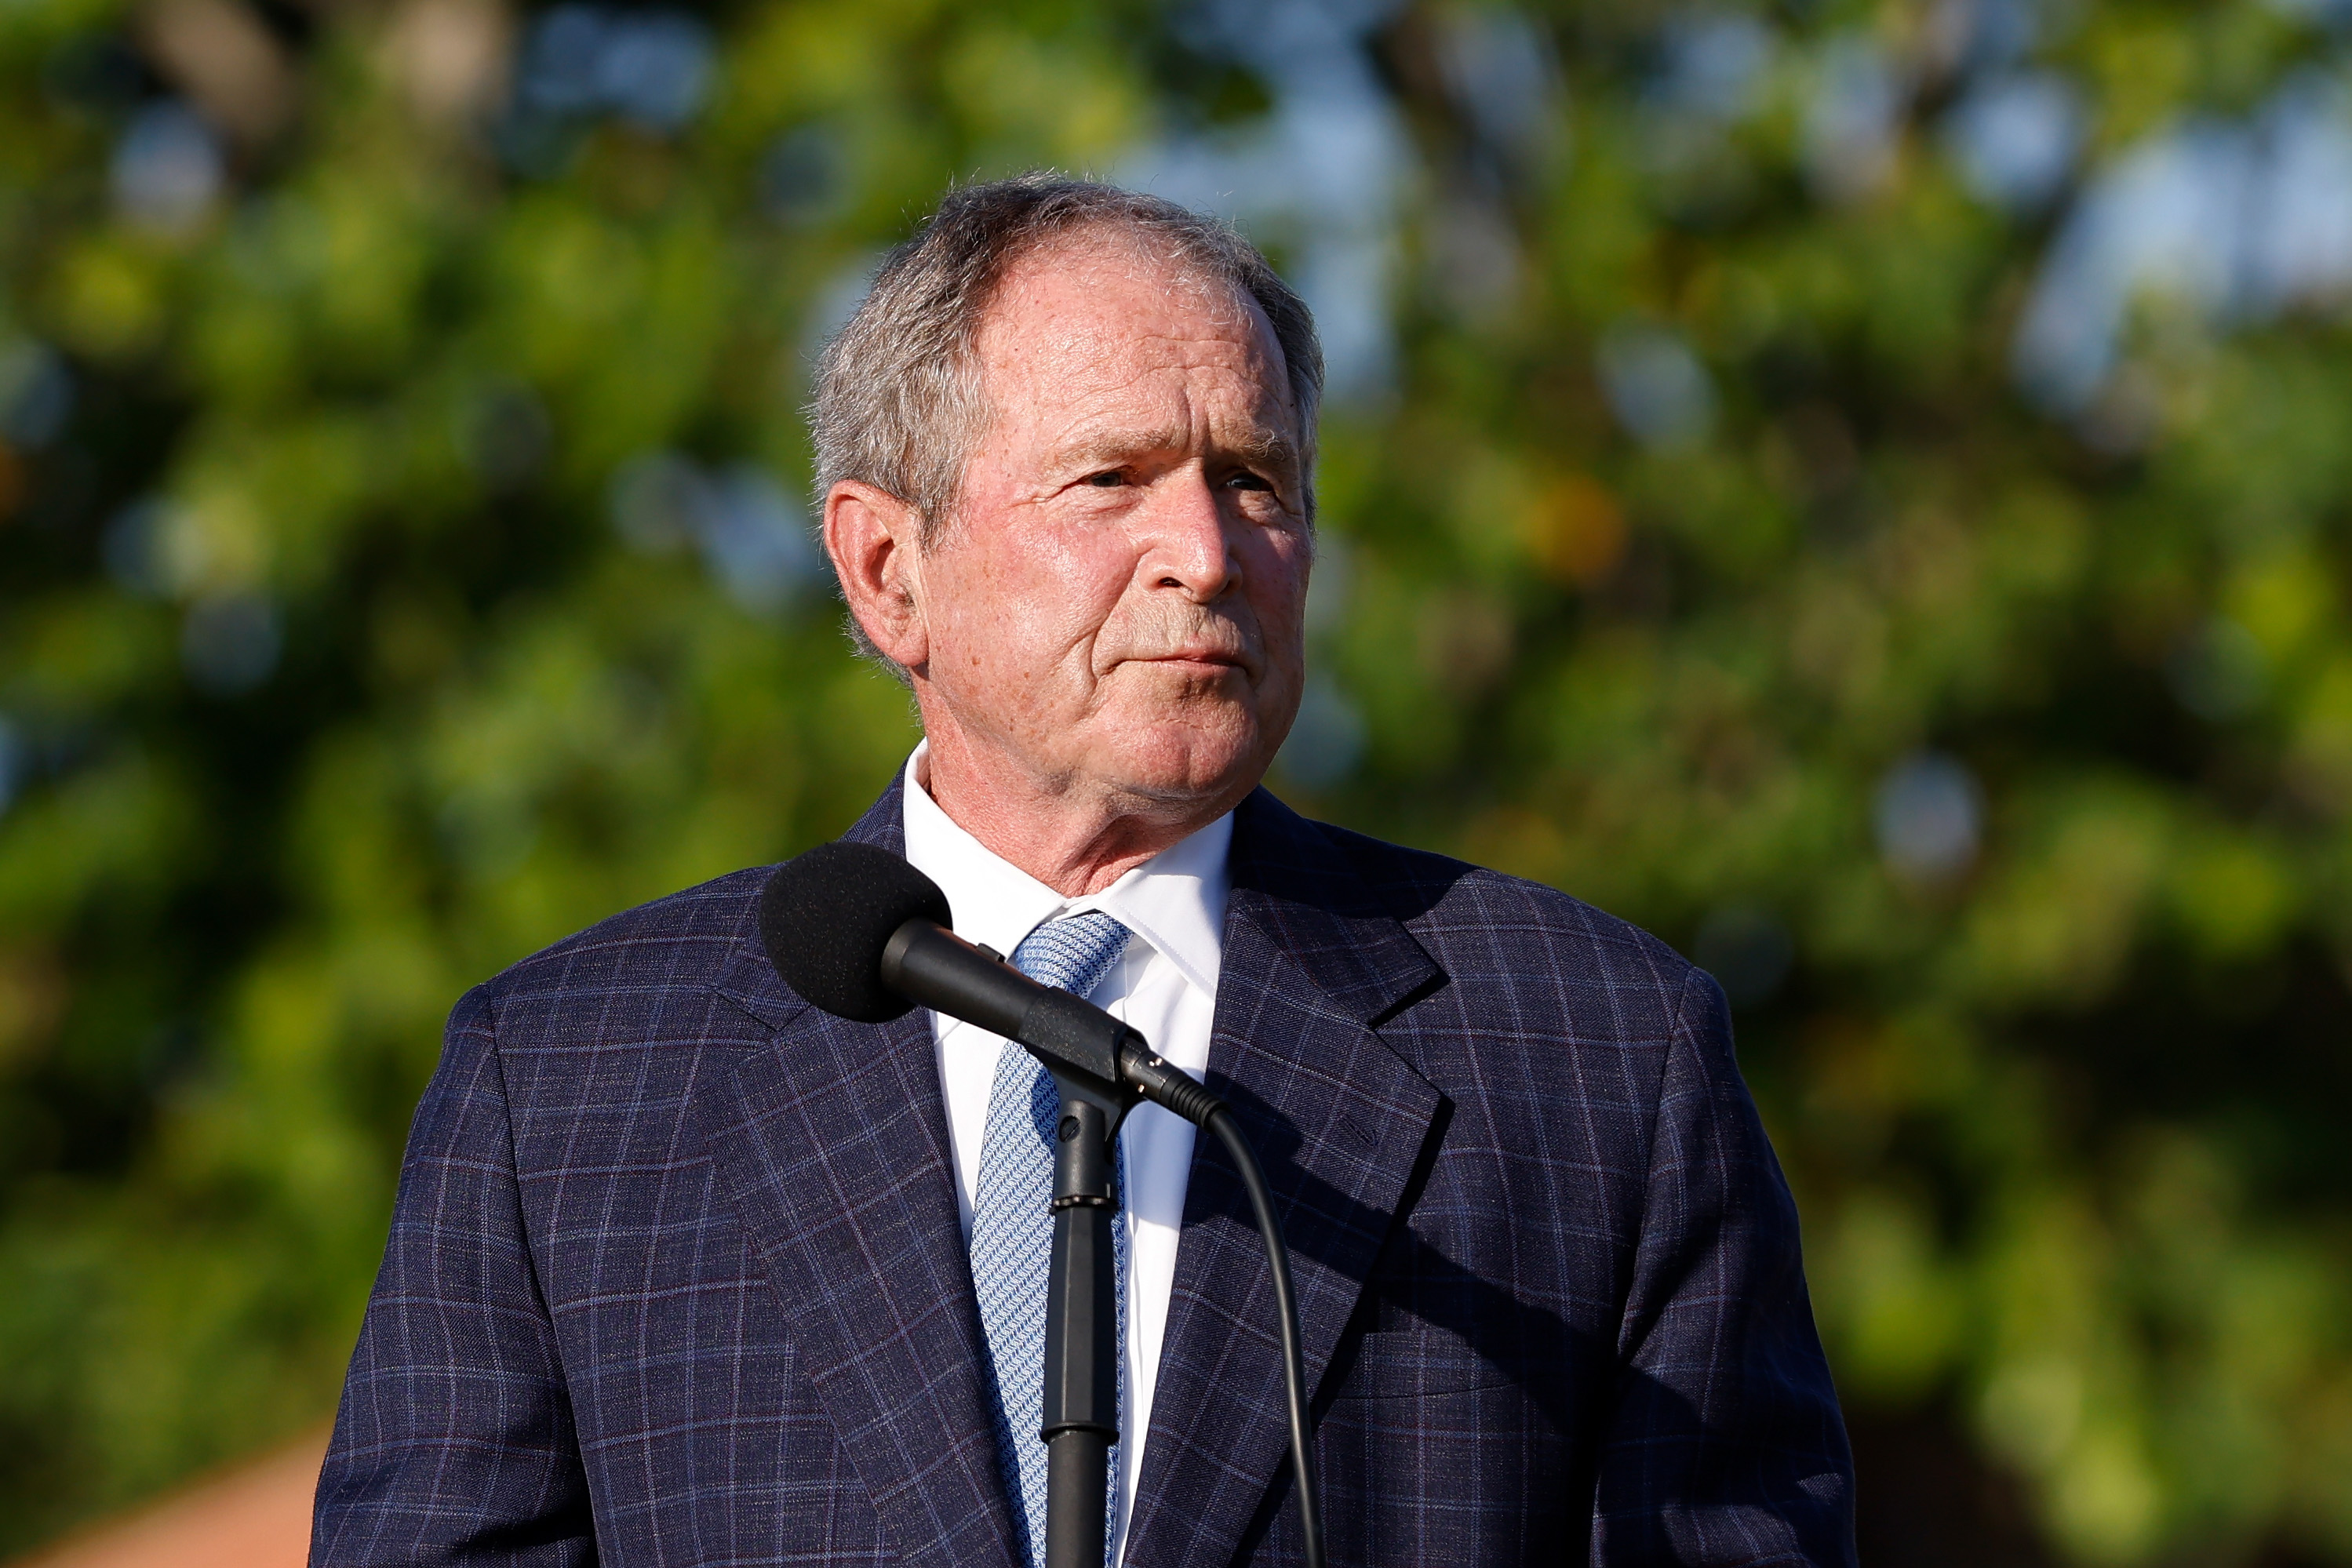 W. Bush Warns of 'Aggressive' Iran, Says Arab World Must Decide